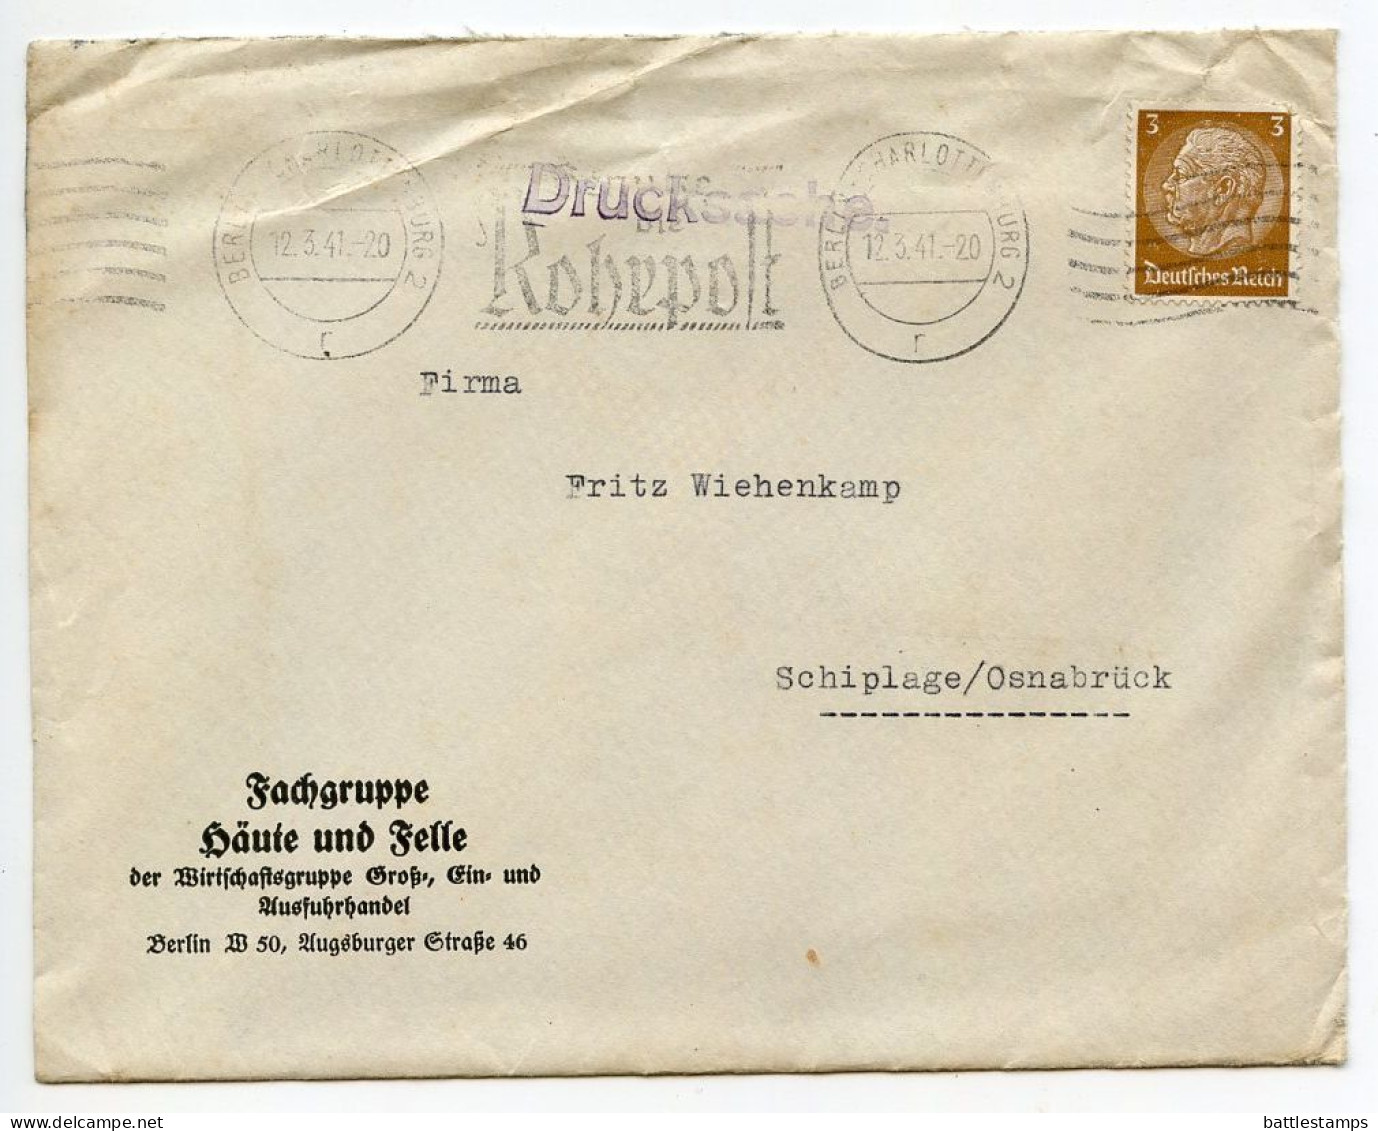 Germany 1941 Cover & Letter; Berlin-Charlottenburg - Fachgruppe Häute Und Felle; 3pf. Hindenburg; Rohrpost Slogan Cancel - Covers & Documents